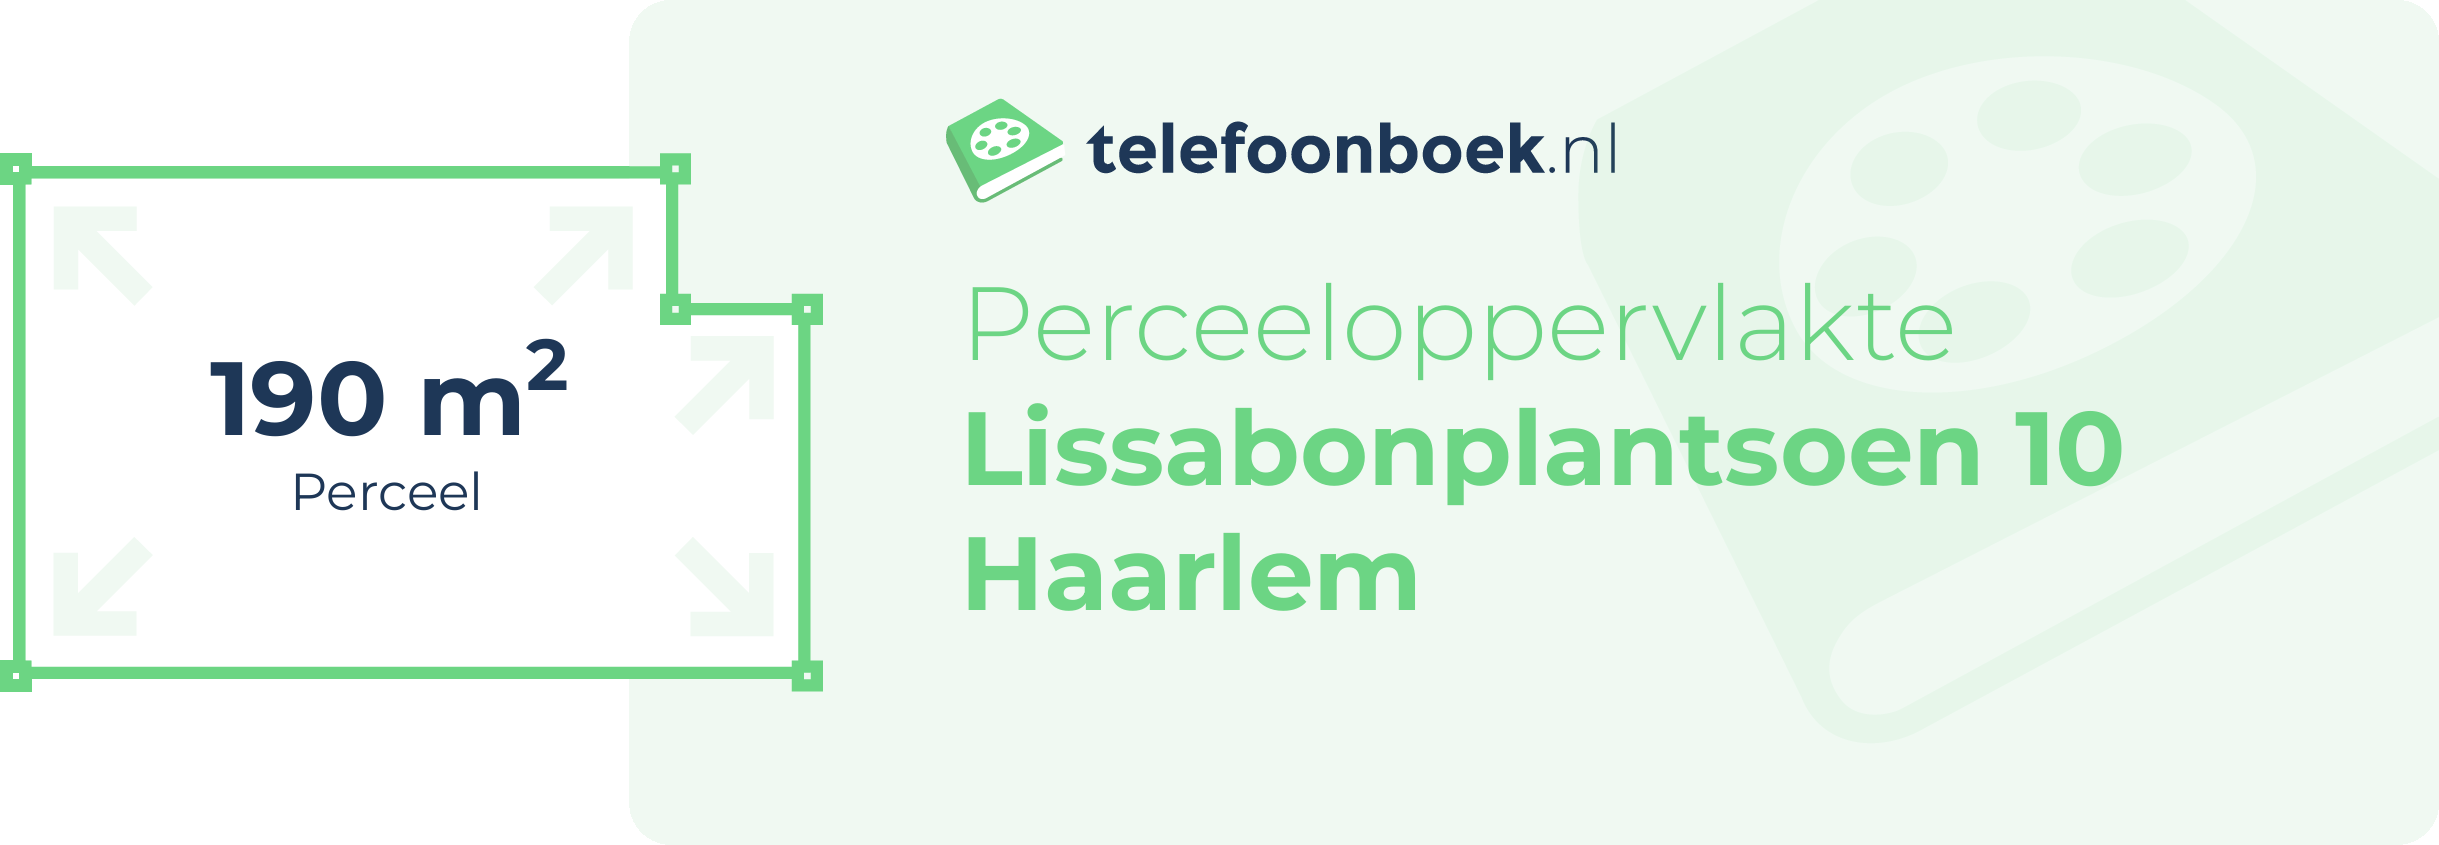 Perceeloppervlakte Lissabonplantsoen 10 Haarlem